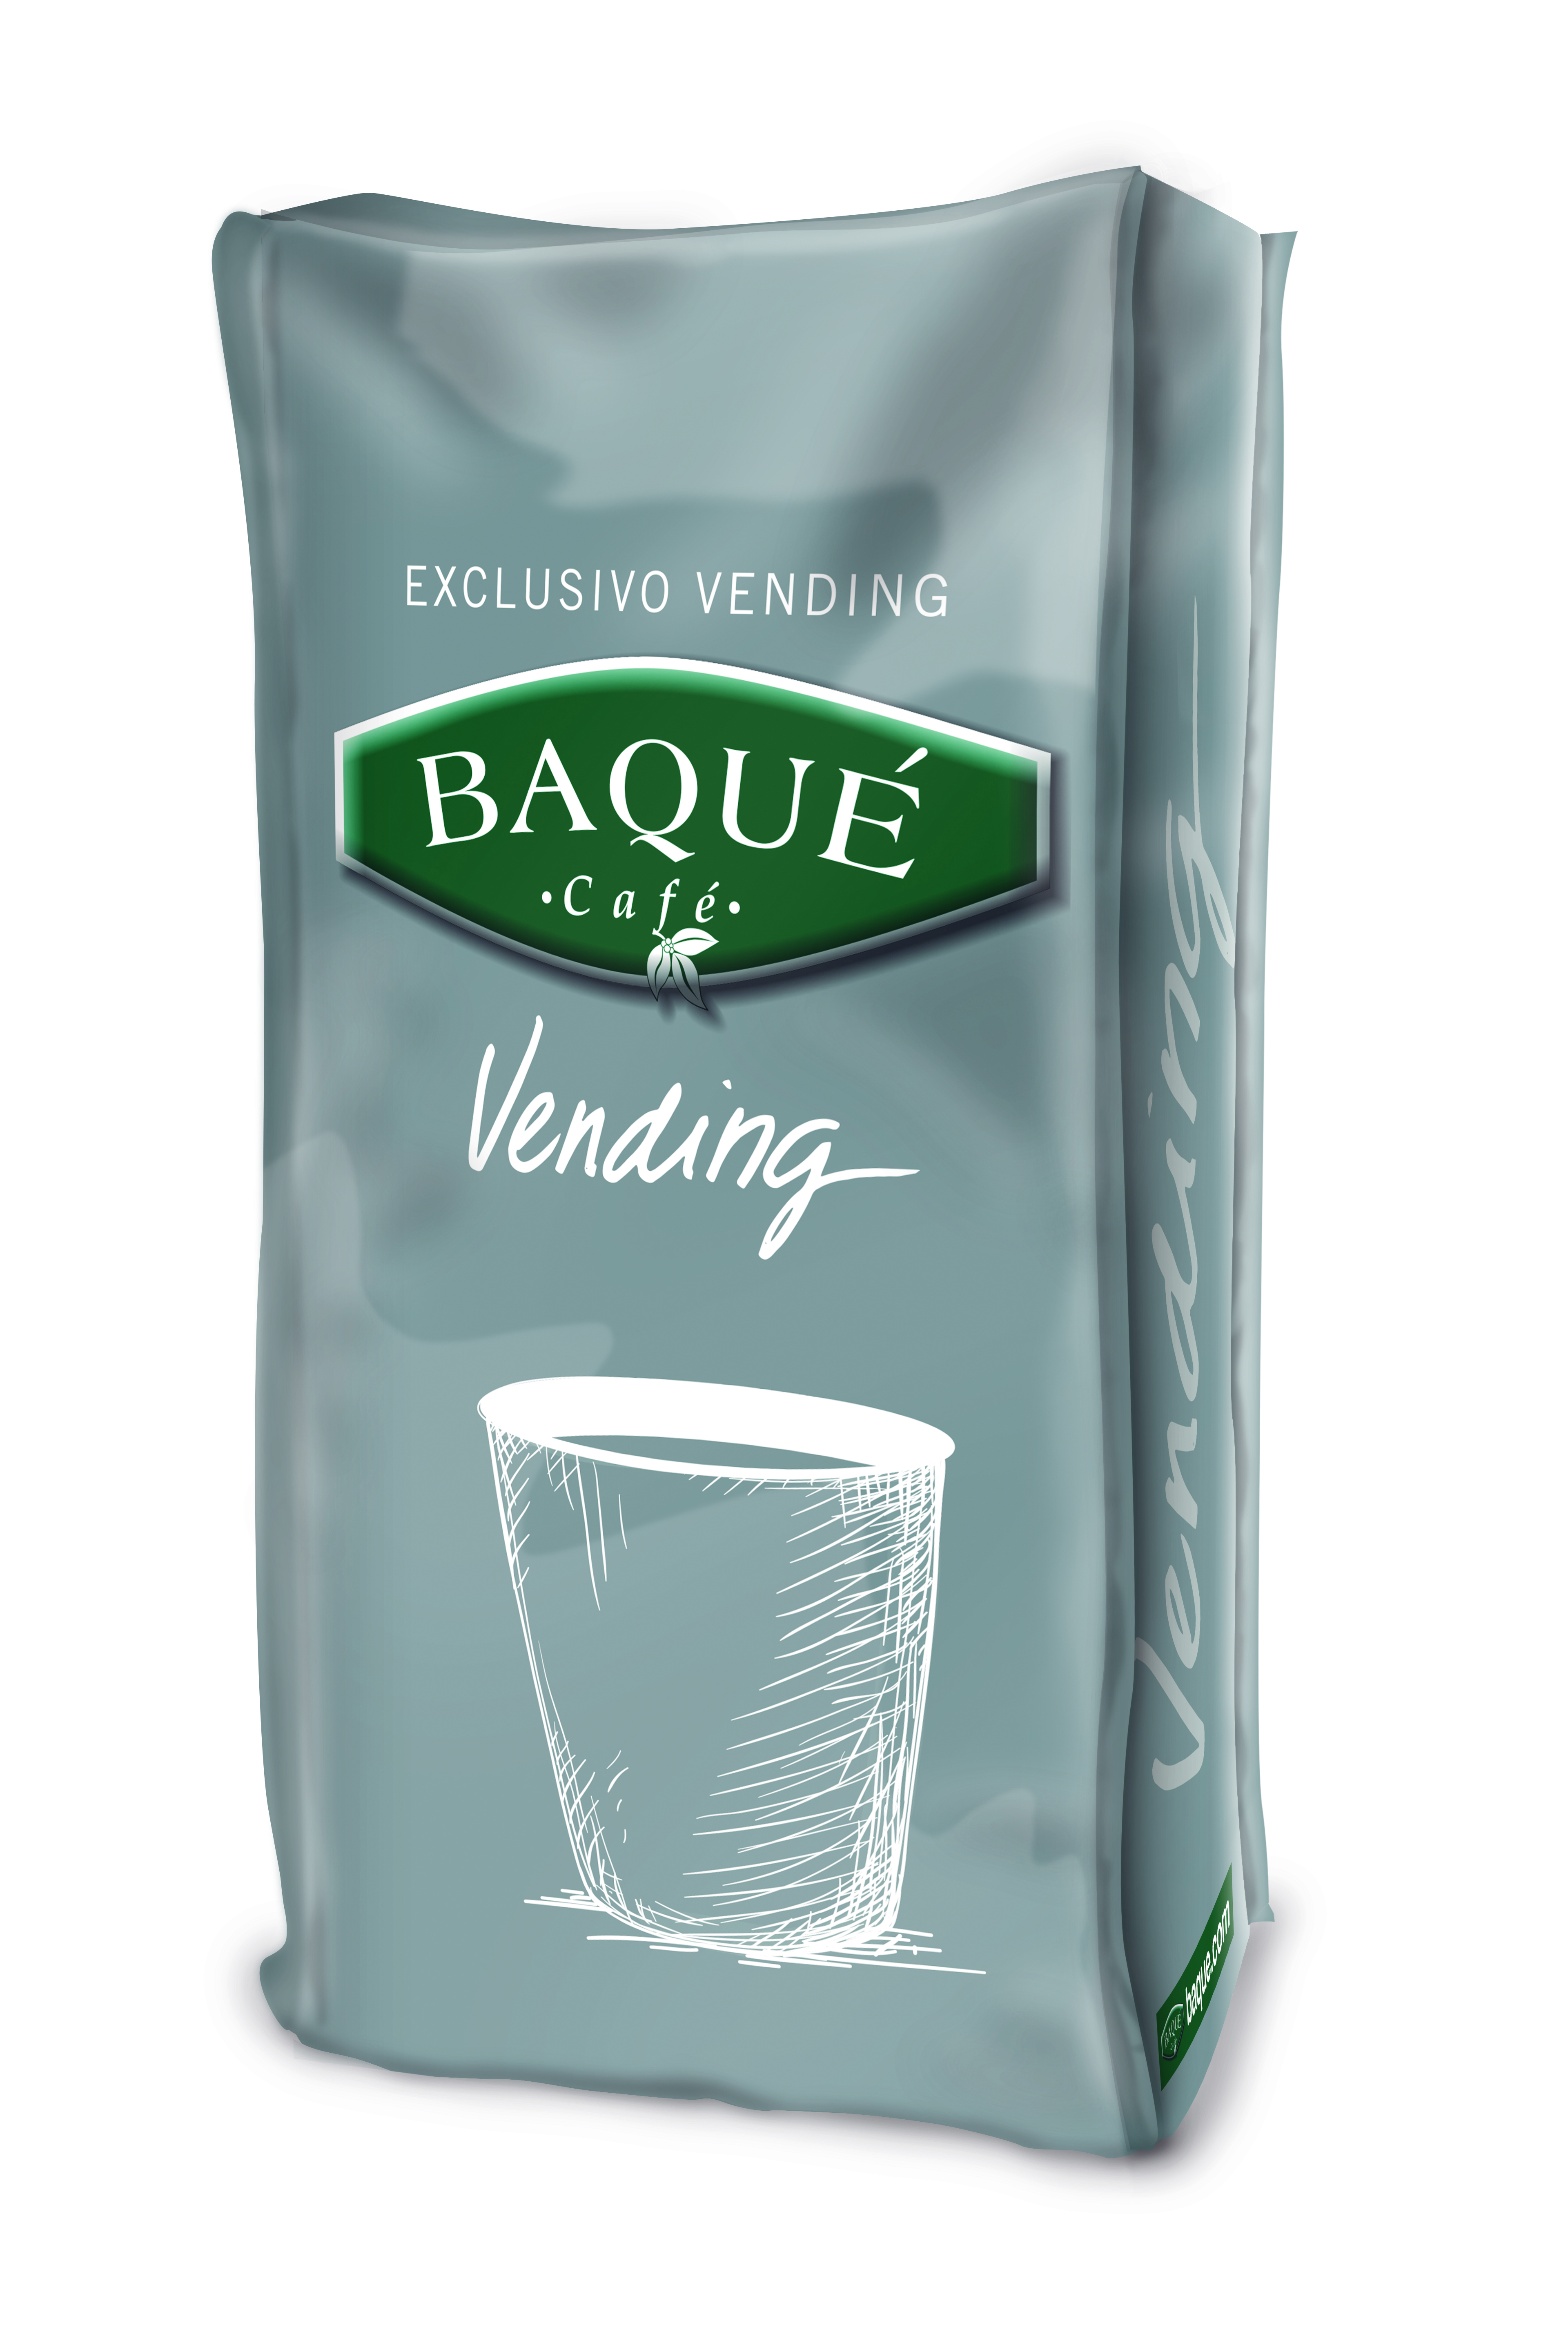 Baque vending